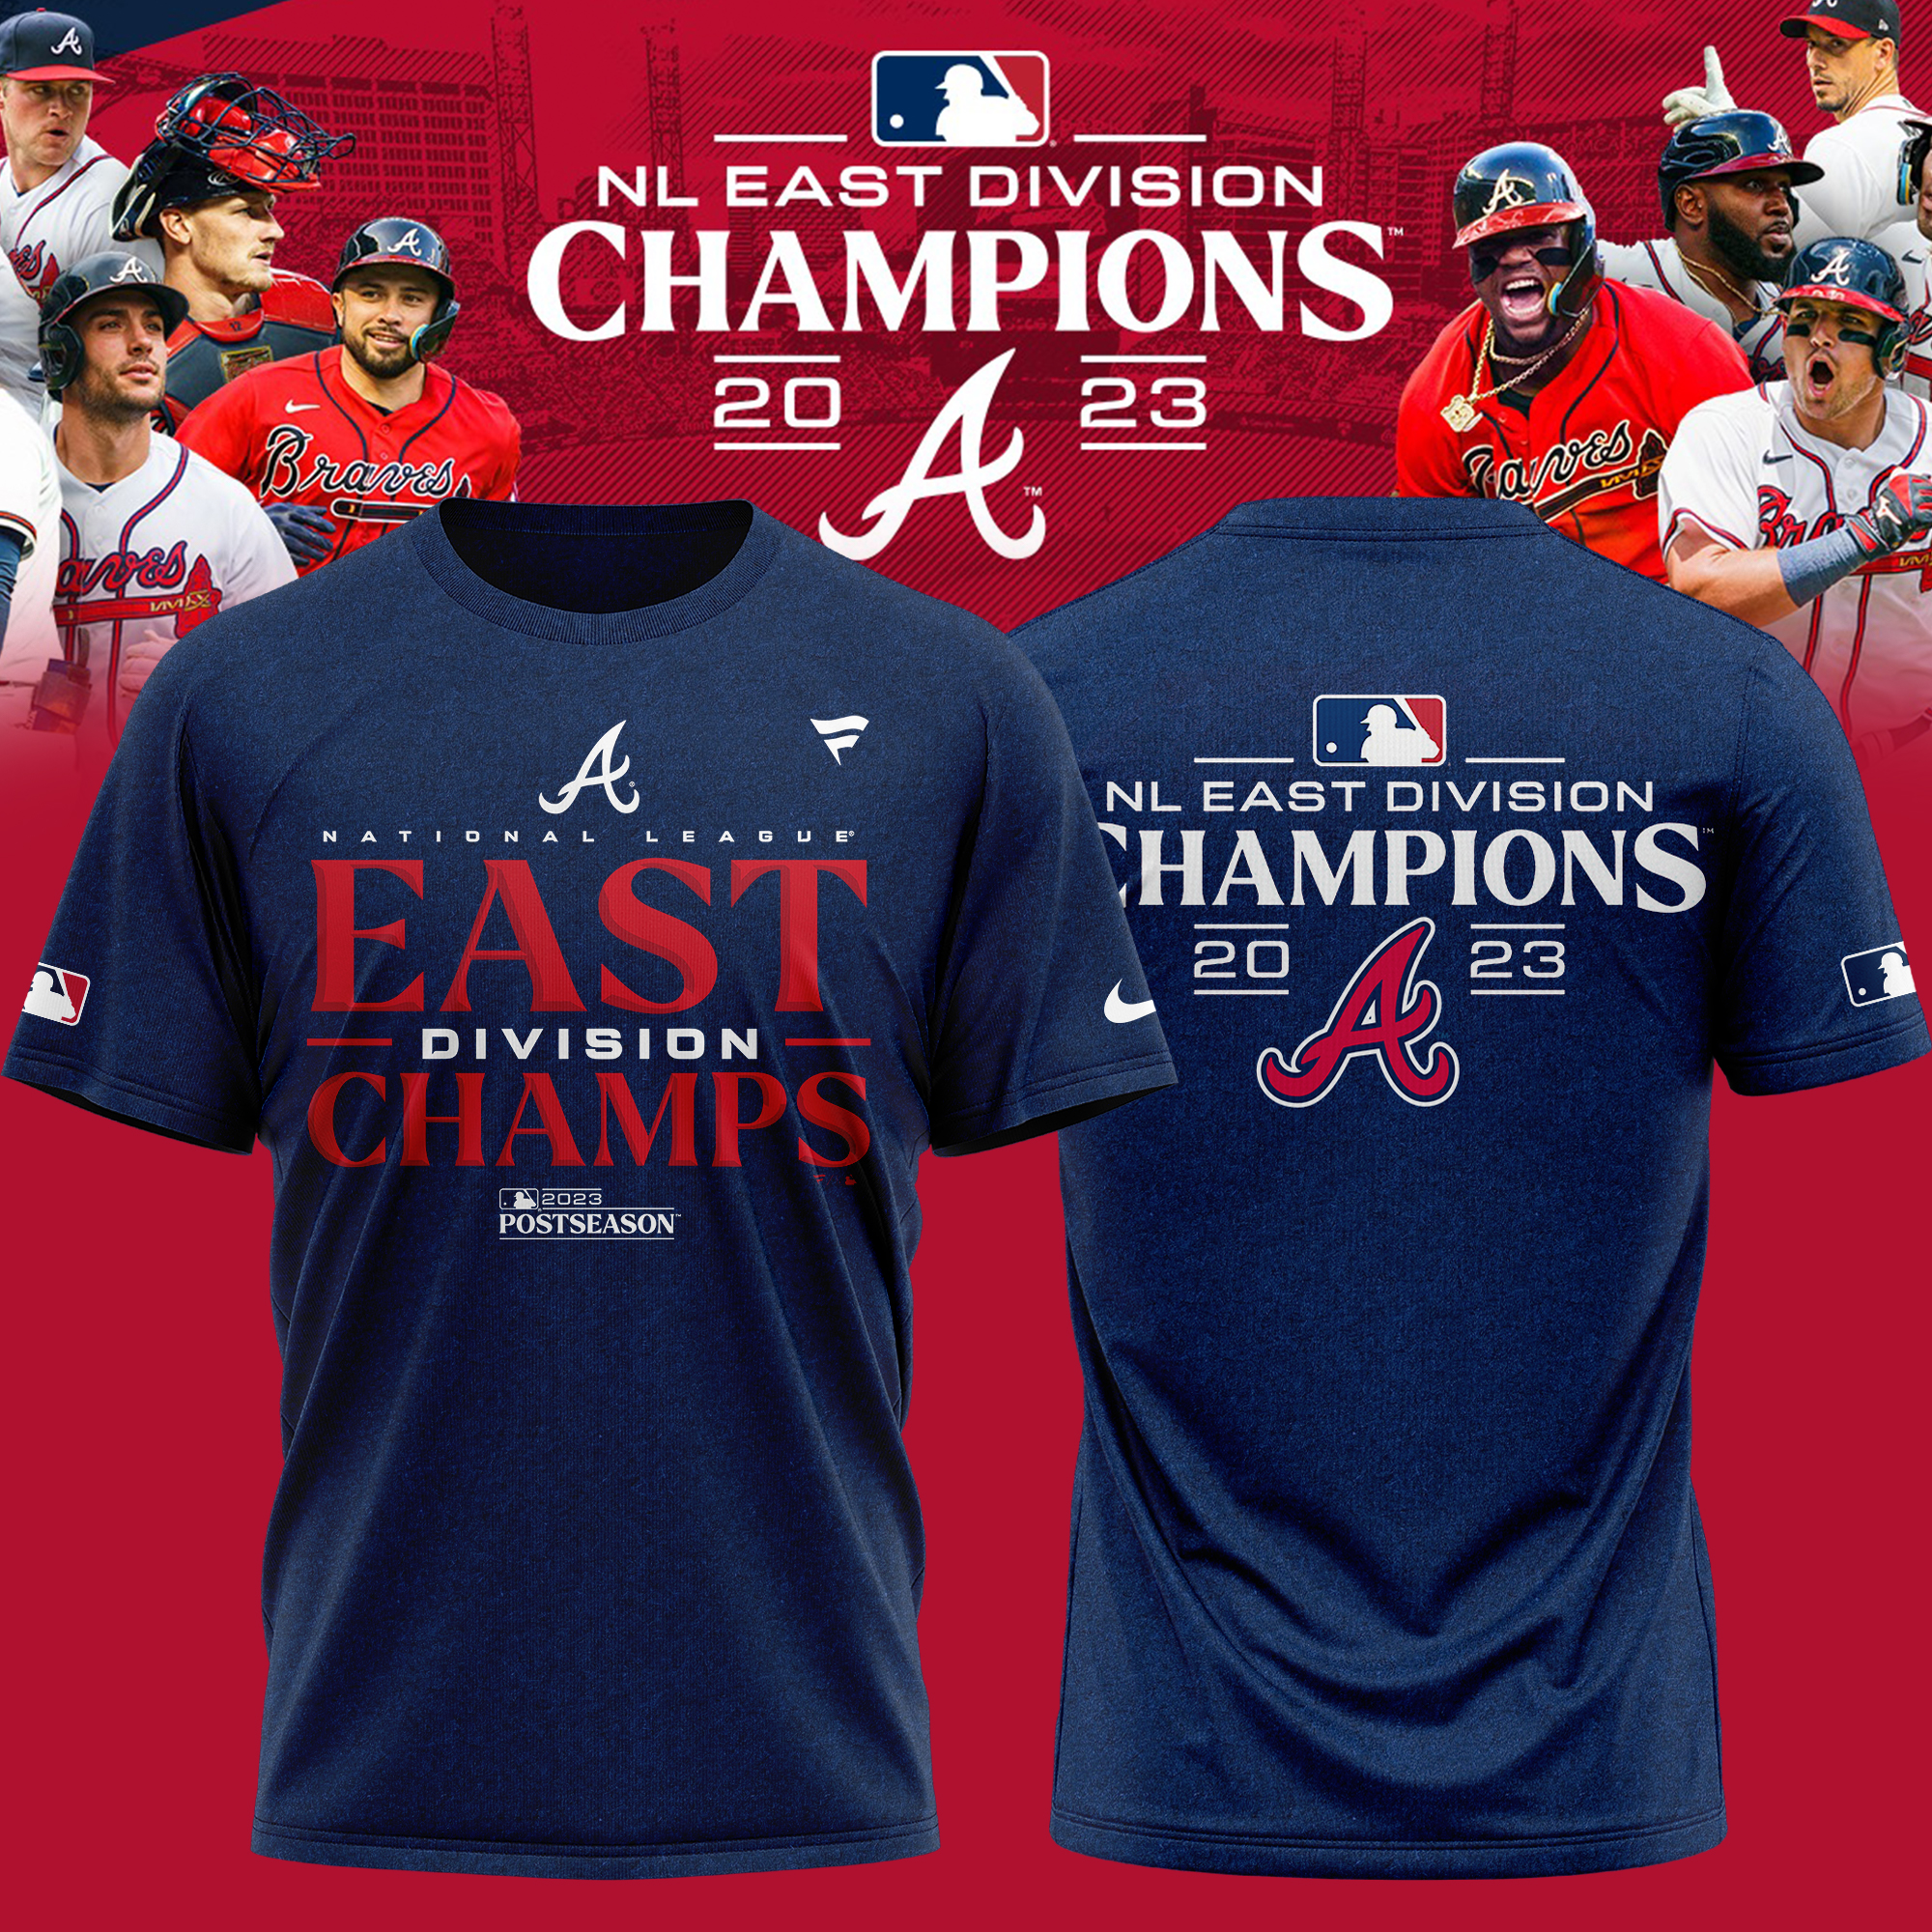 Atlanta Braves T-Shirts for Sale